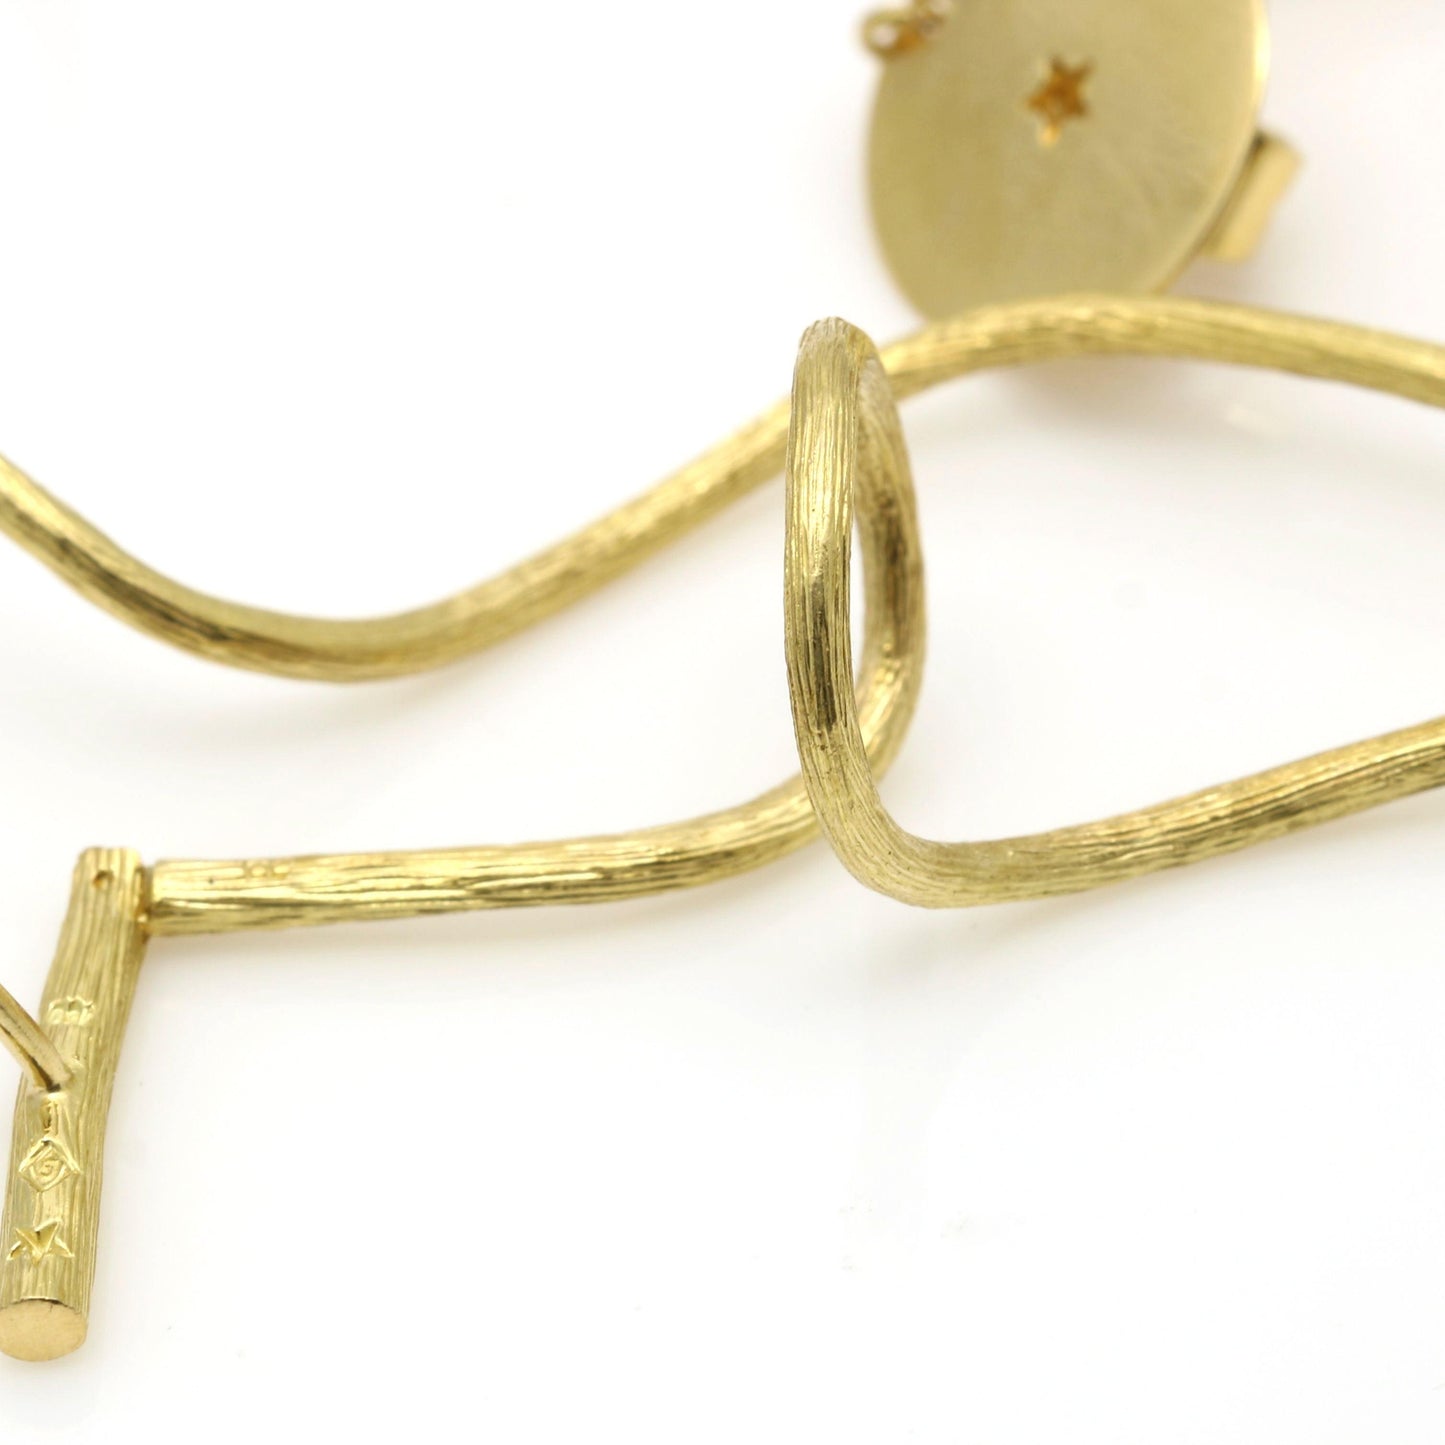 H. Stern Zephyr Florentine Finish Long Drop Earrings in 18k Yellow Gold - 31 Jewels Inc.